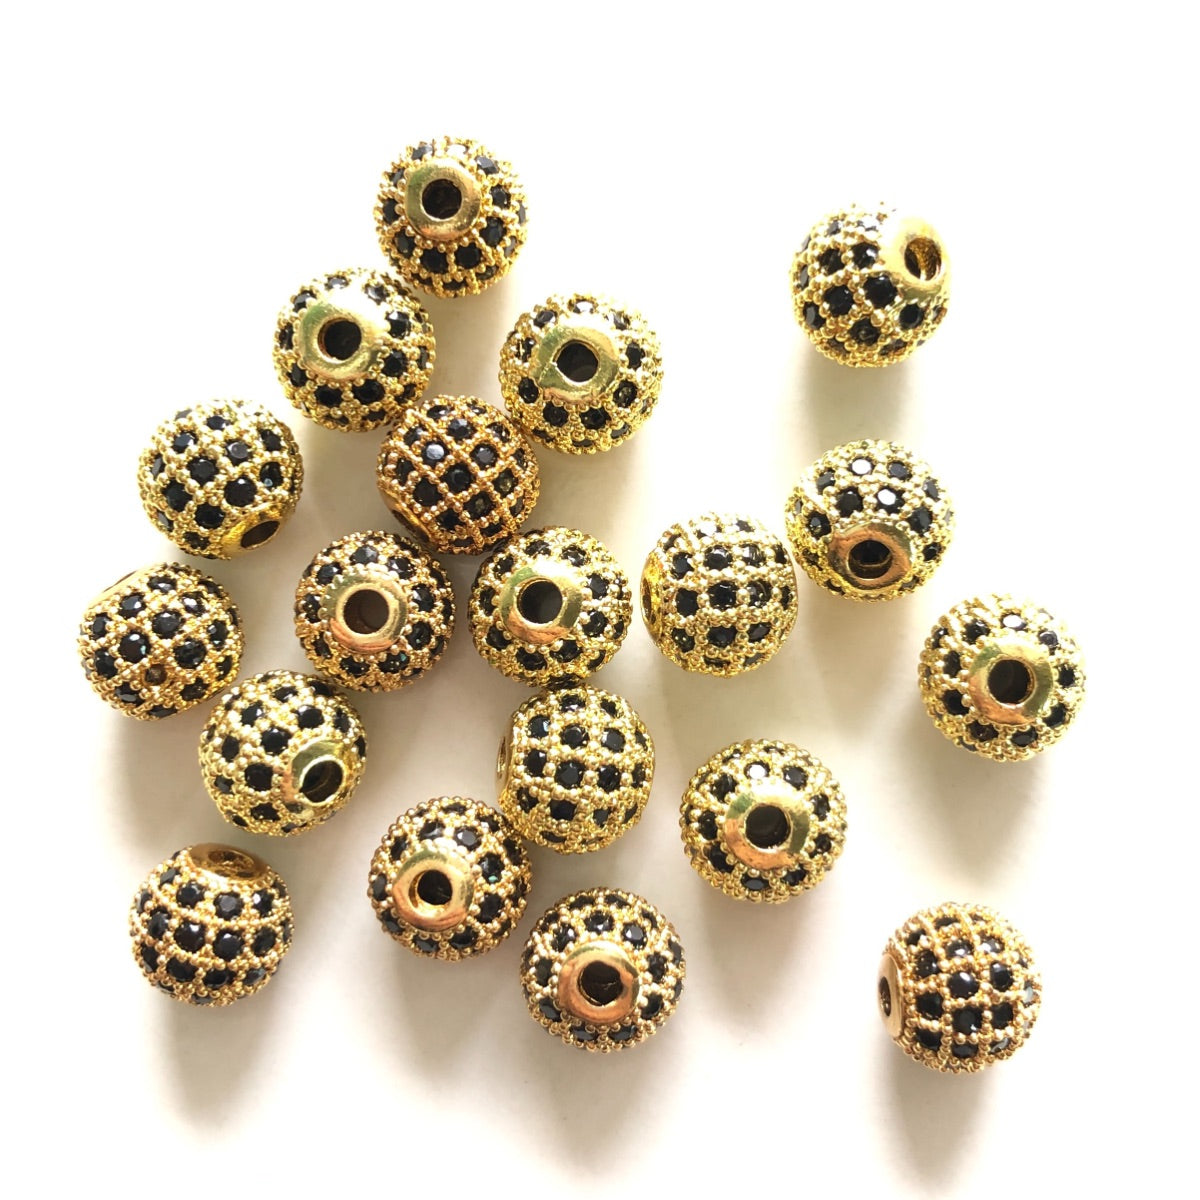 20pcs/lot 8mm Black CZ Paved Ball Spacers Gold CZ Paved Spacers 8mm Beads Ball Beads Charms Beads Beyond